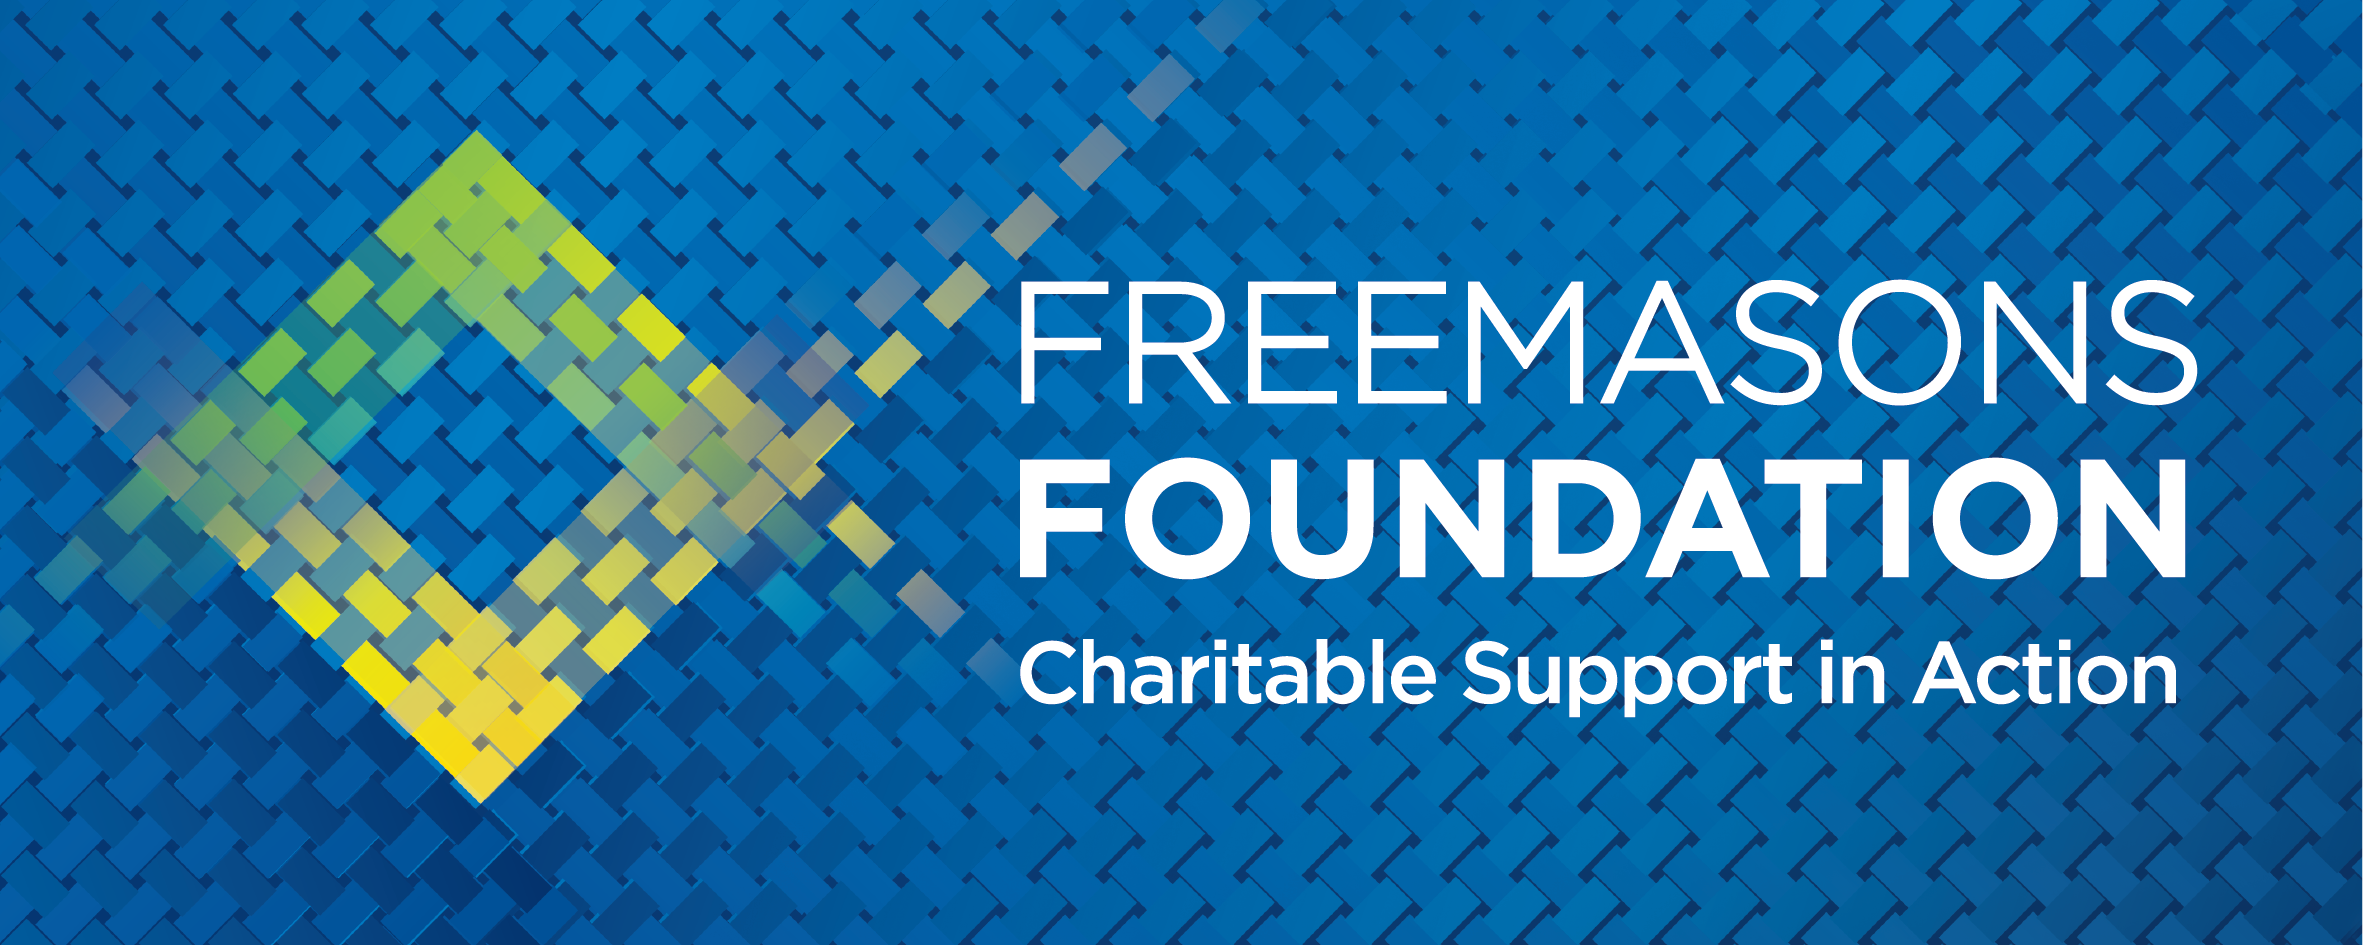 Freemasons Foundation LogoLg_RGB (1).png